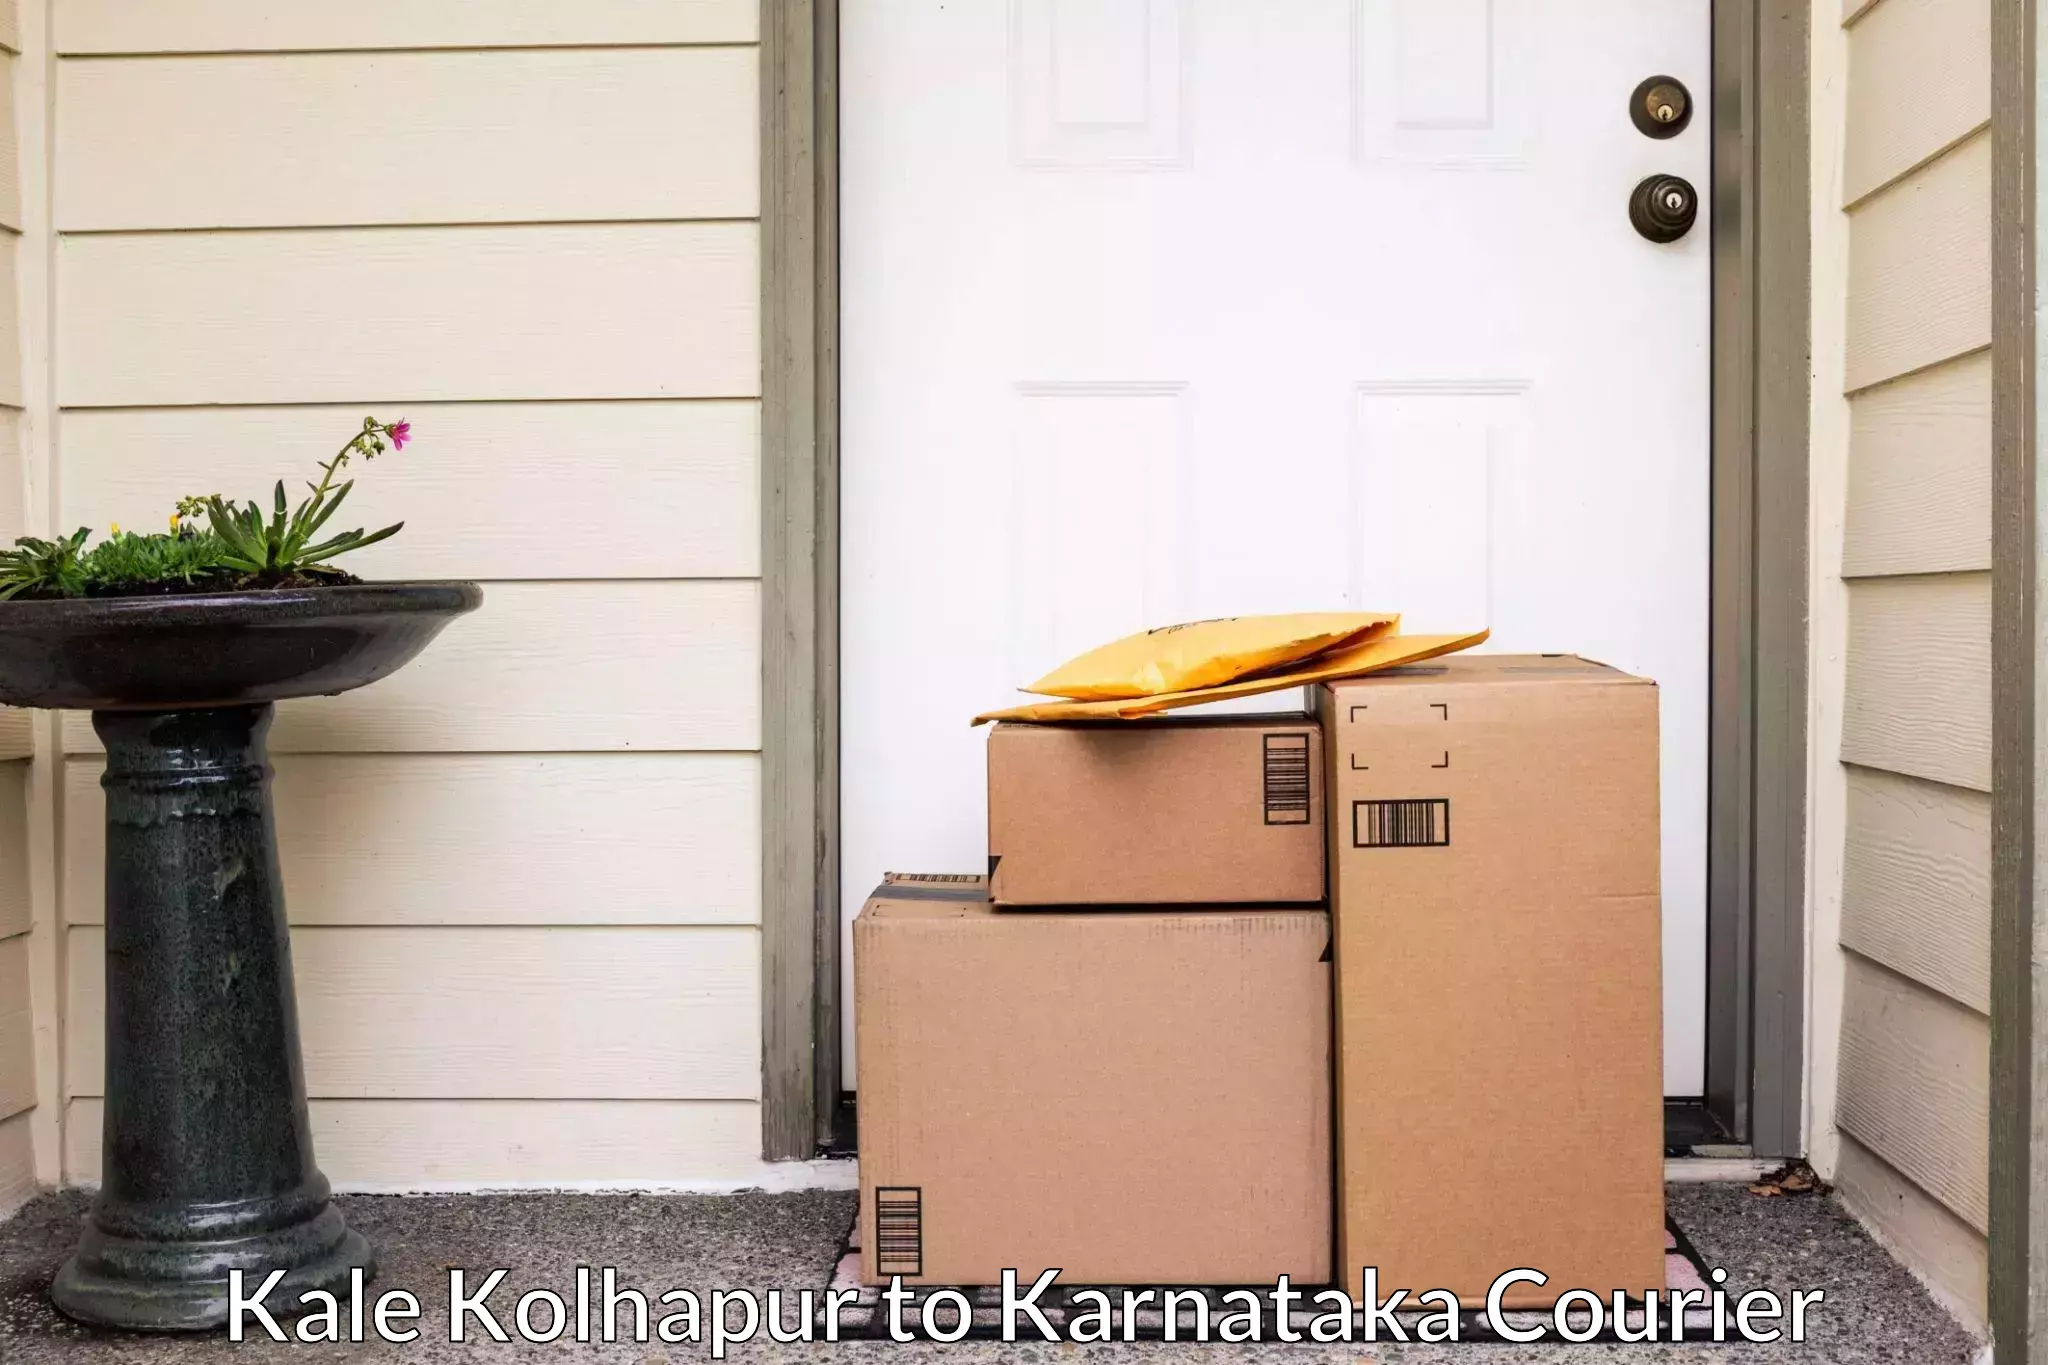 Home shifting experts Kale Kolhapur to Karnataka